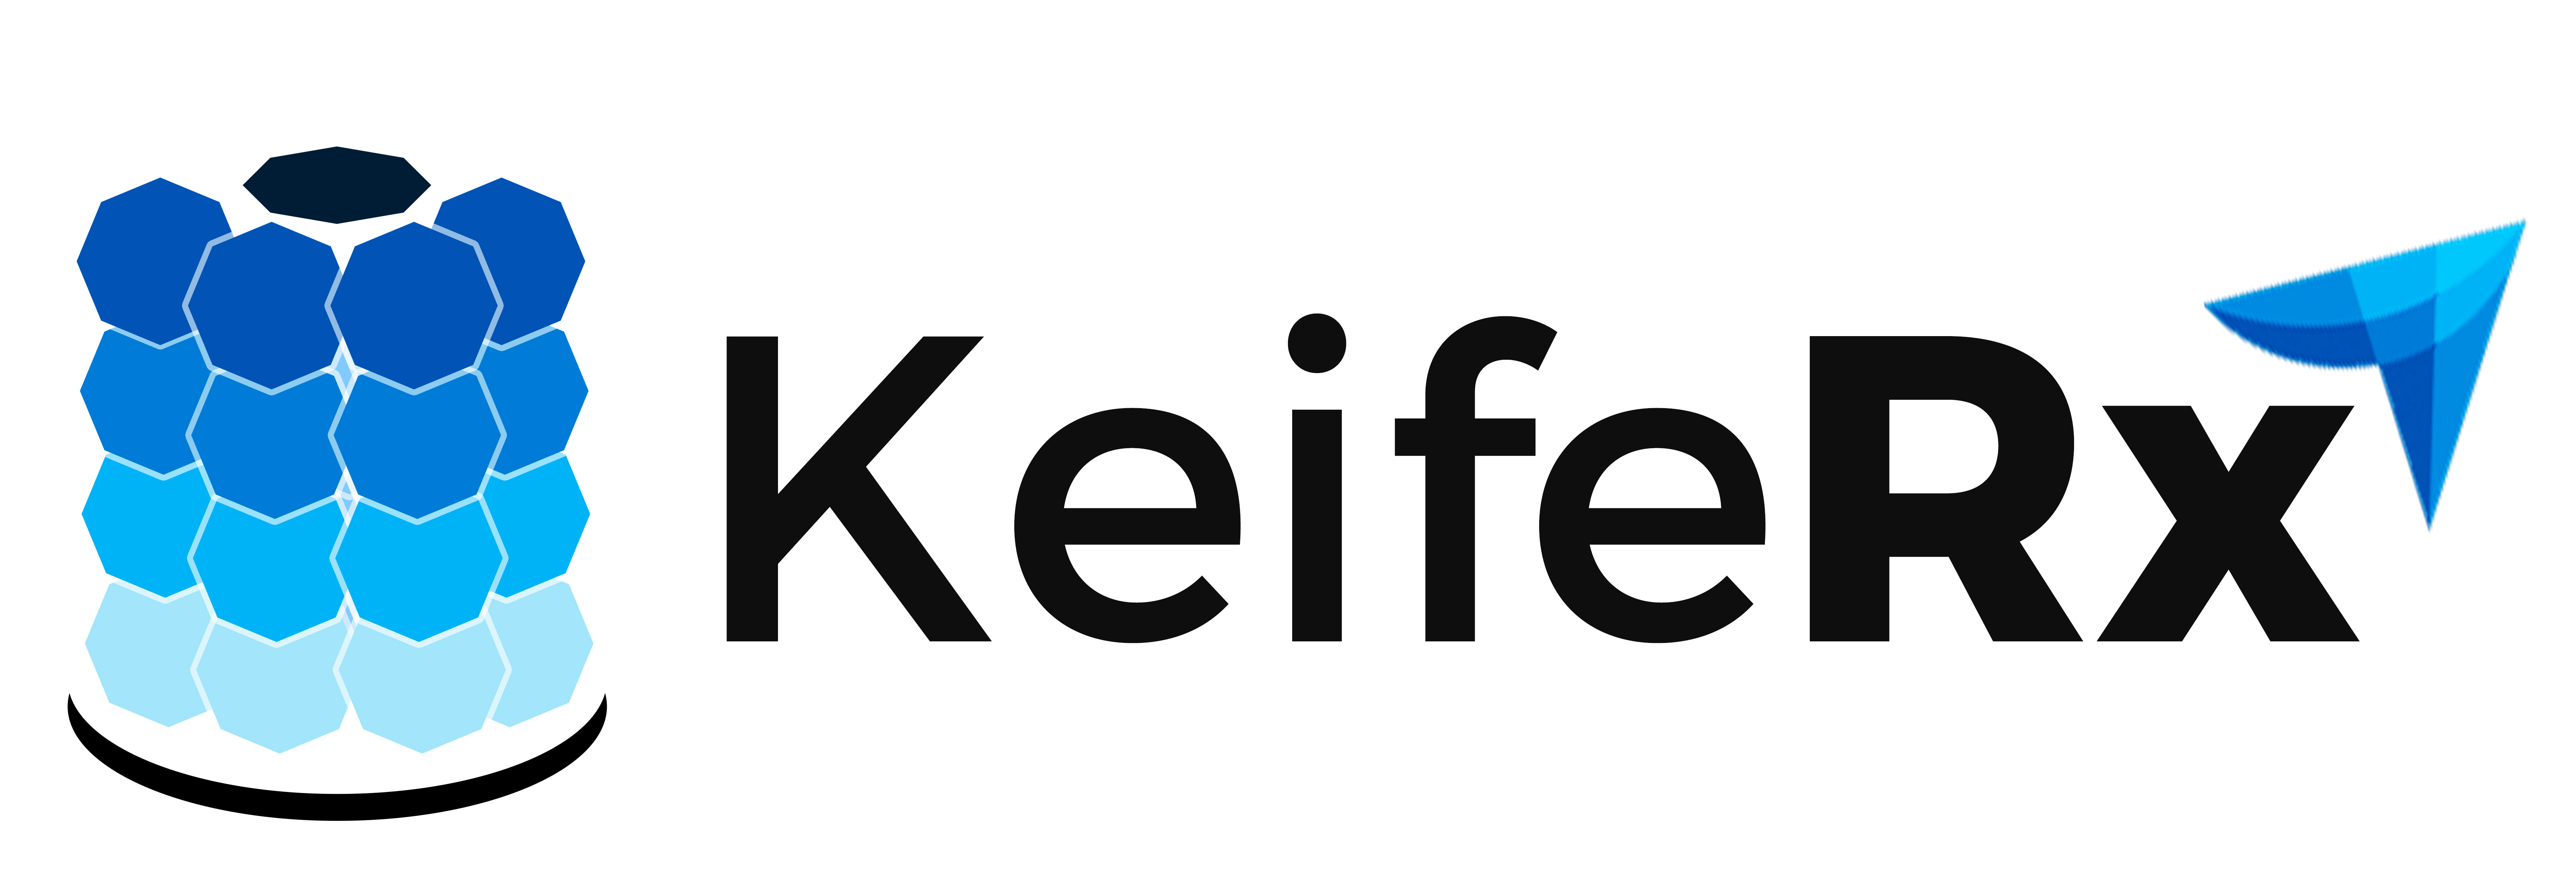 B KeifeRx (Oro)